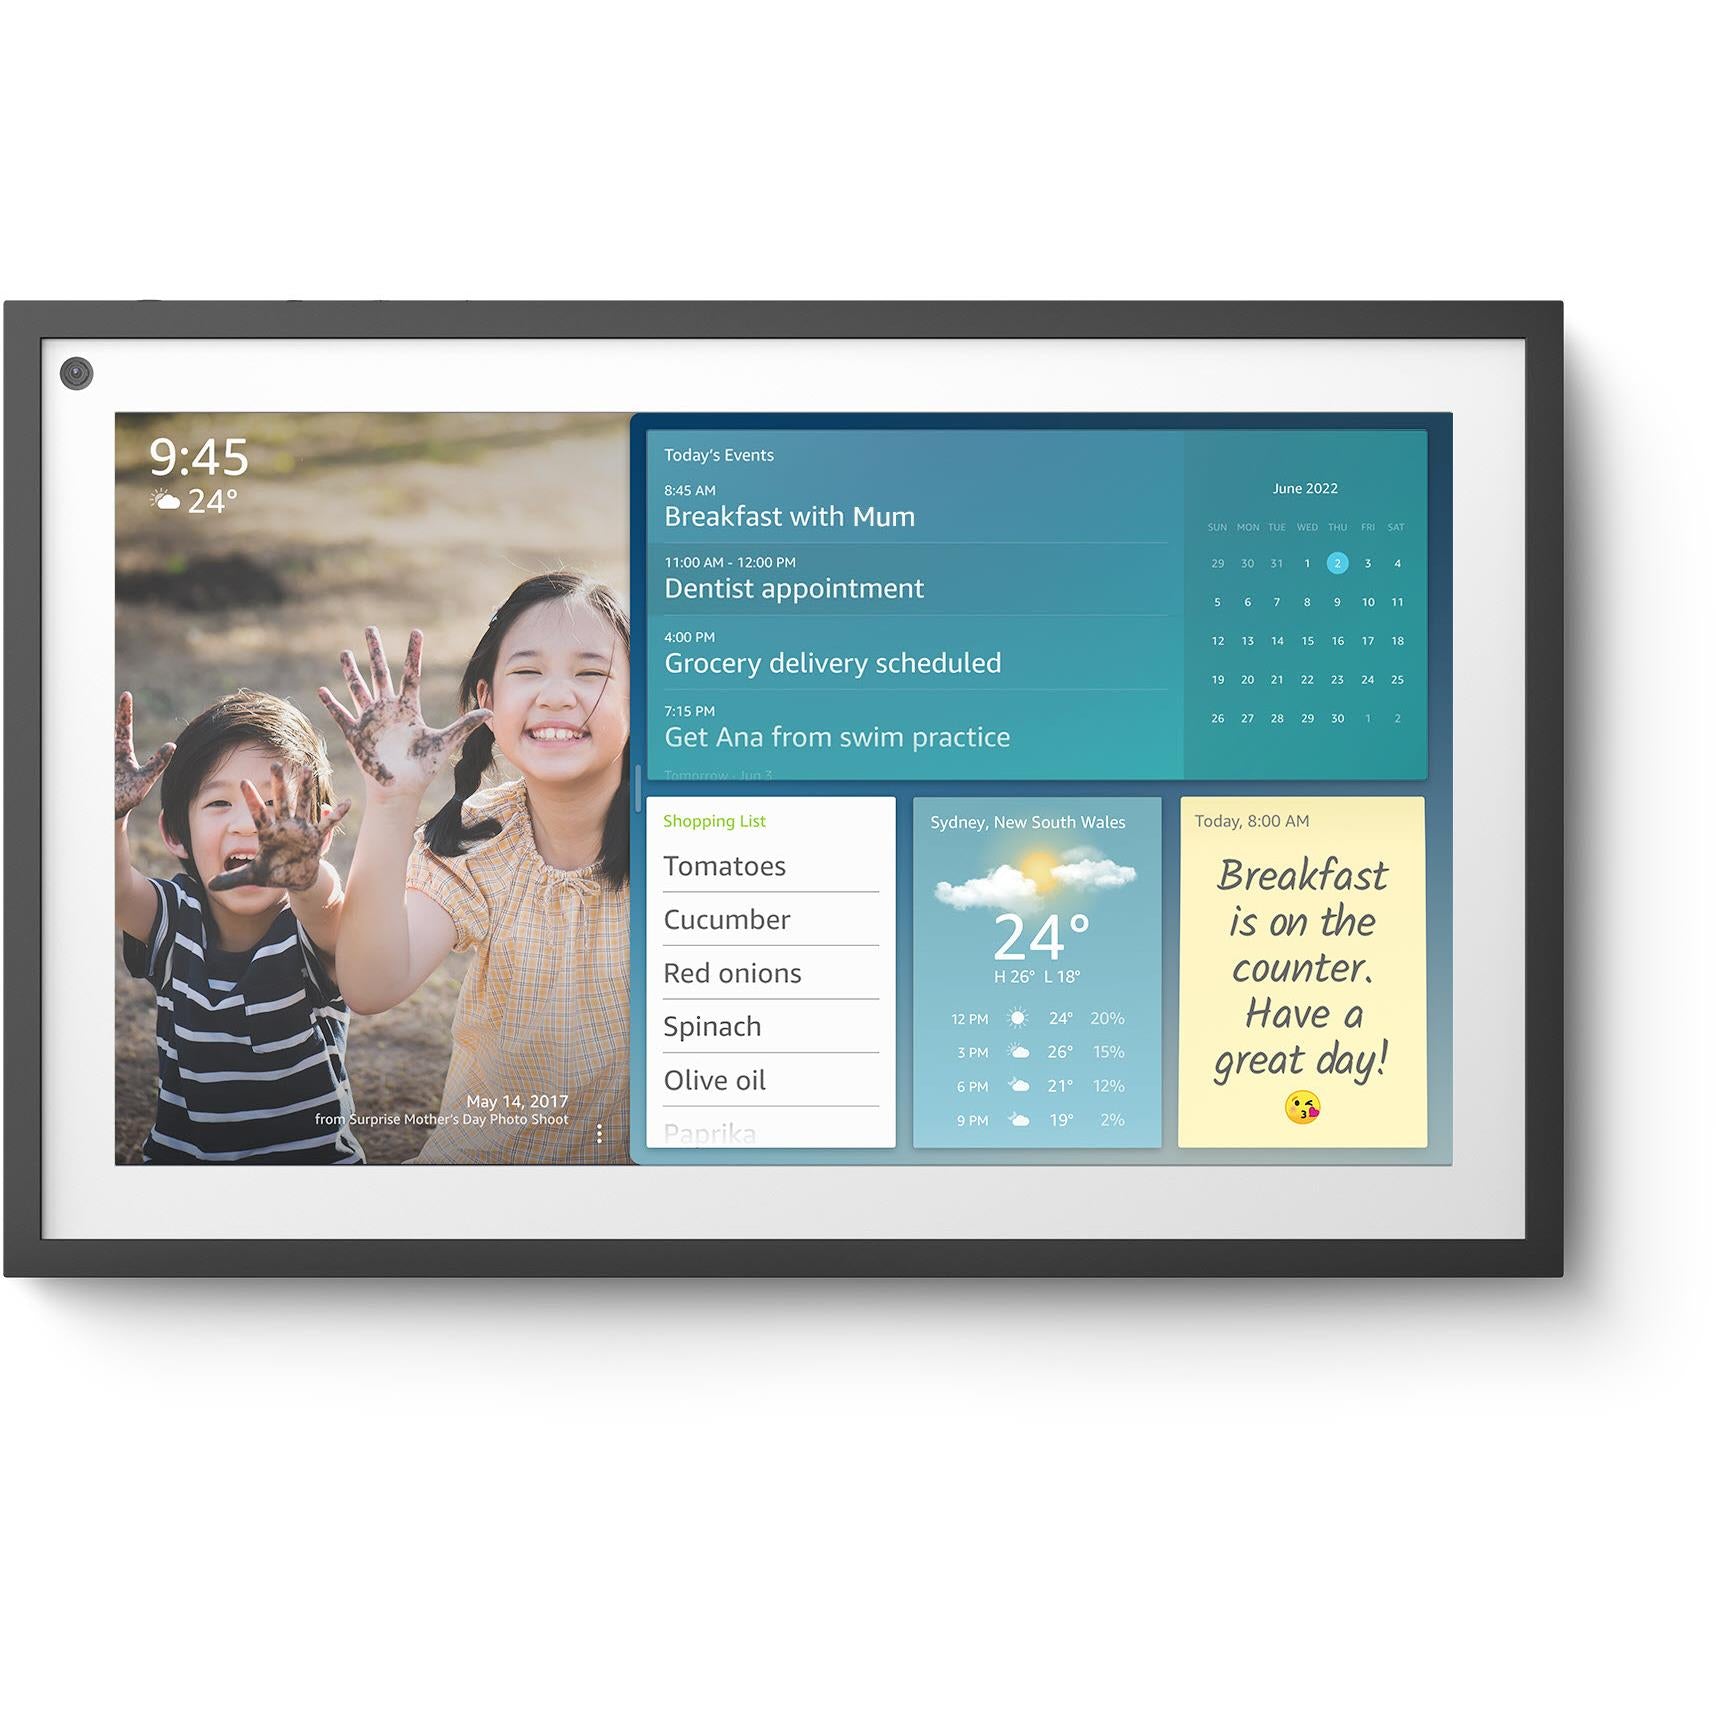 Echo Show 15 15.6-inch full HD smart display with Alexa Fire TV